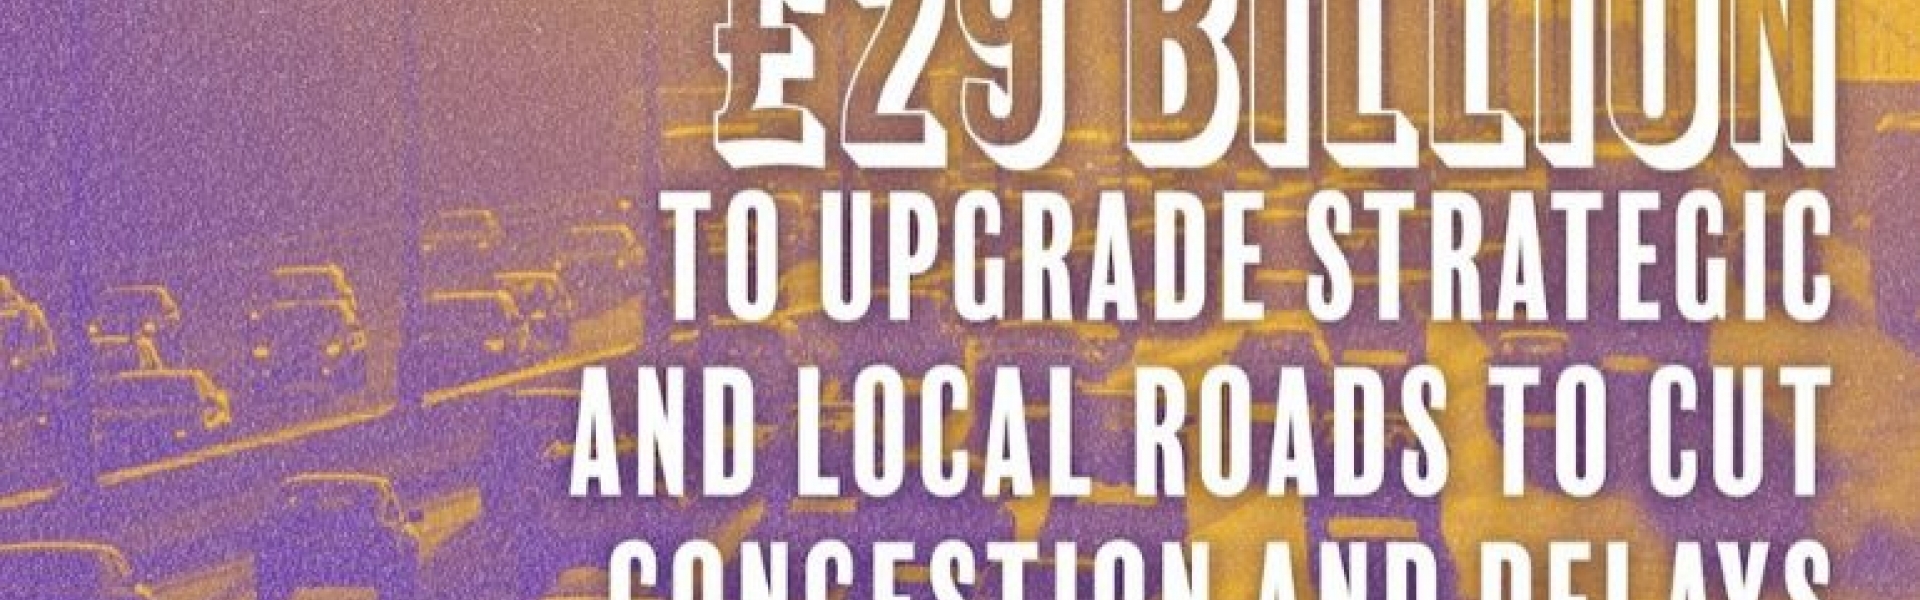 £29bn to upgrade strategic roads